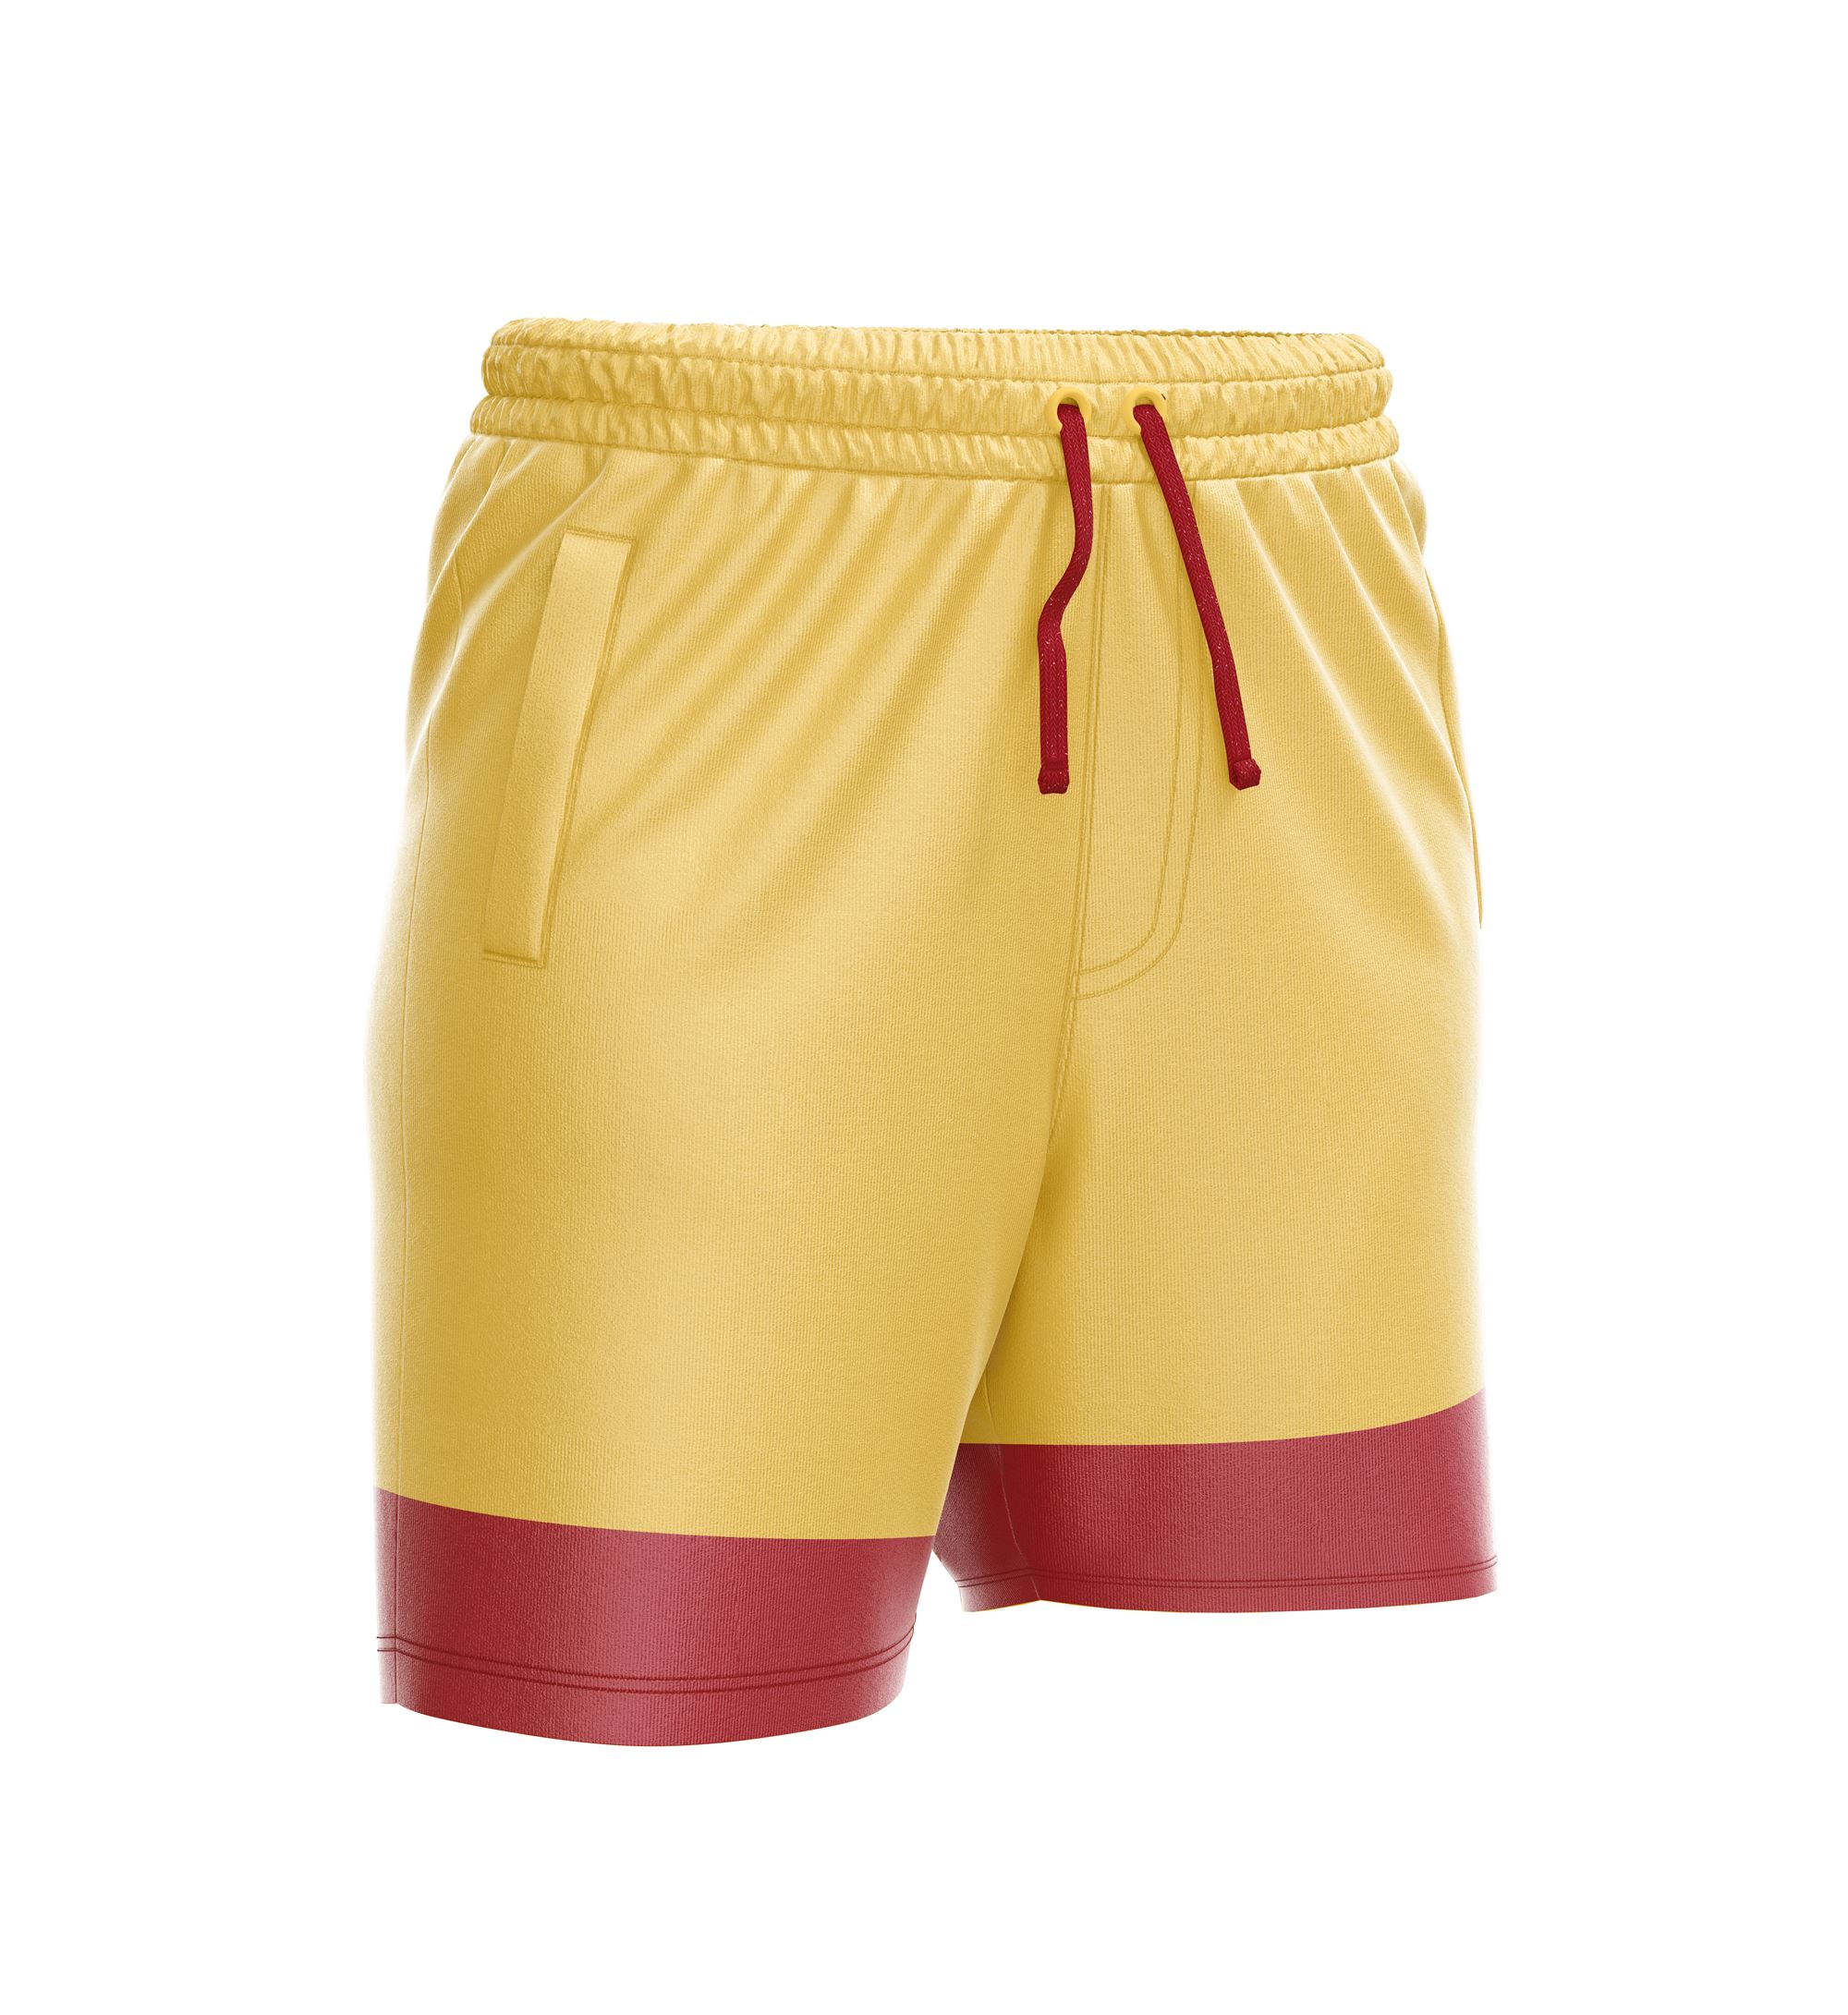 Soccer Shorts - Varsity Pattern - Reversible/single ply